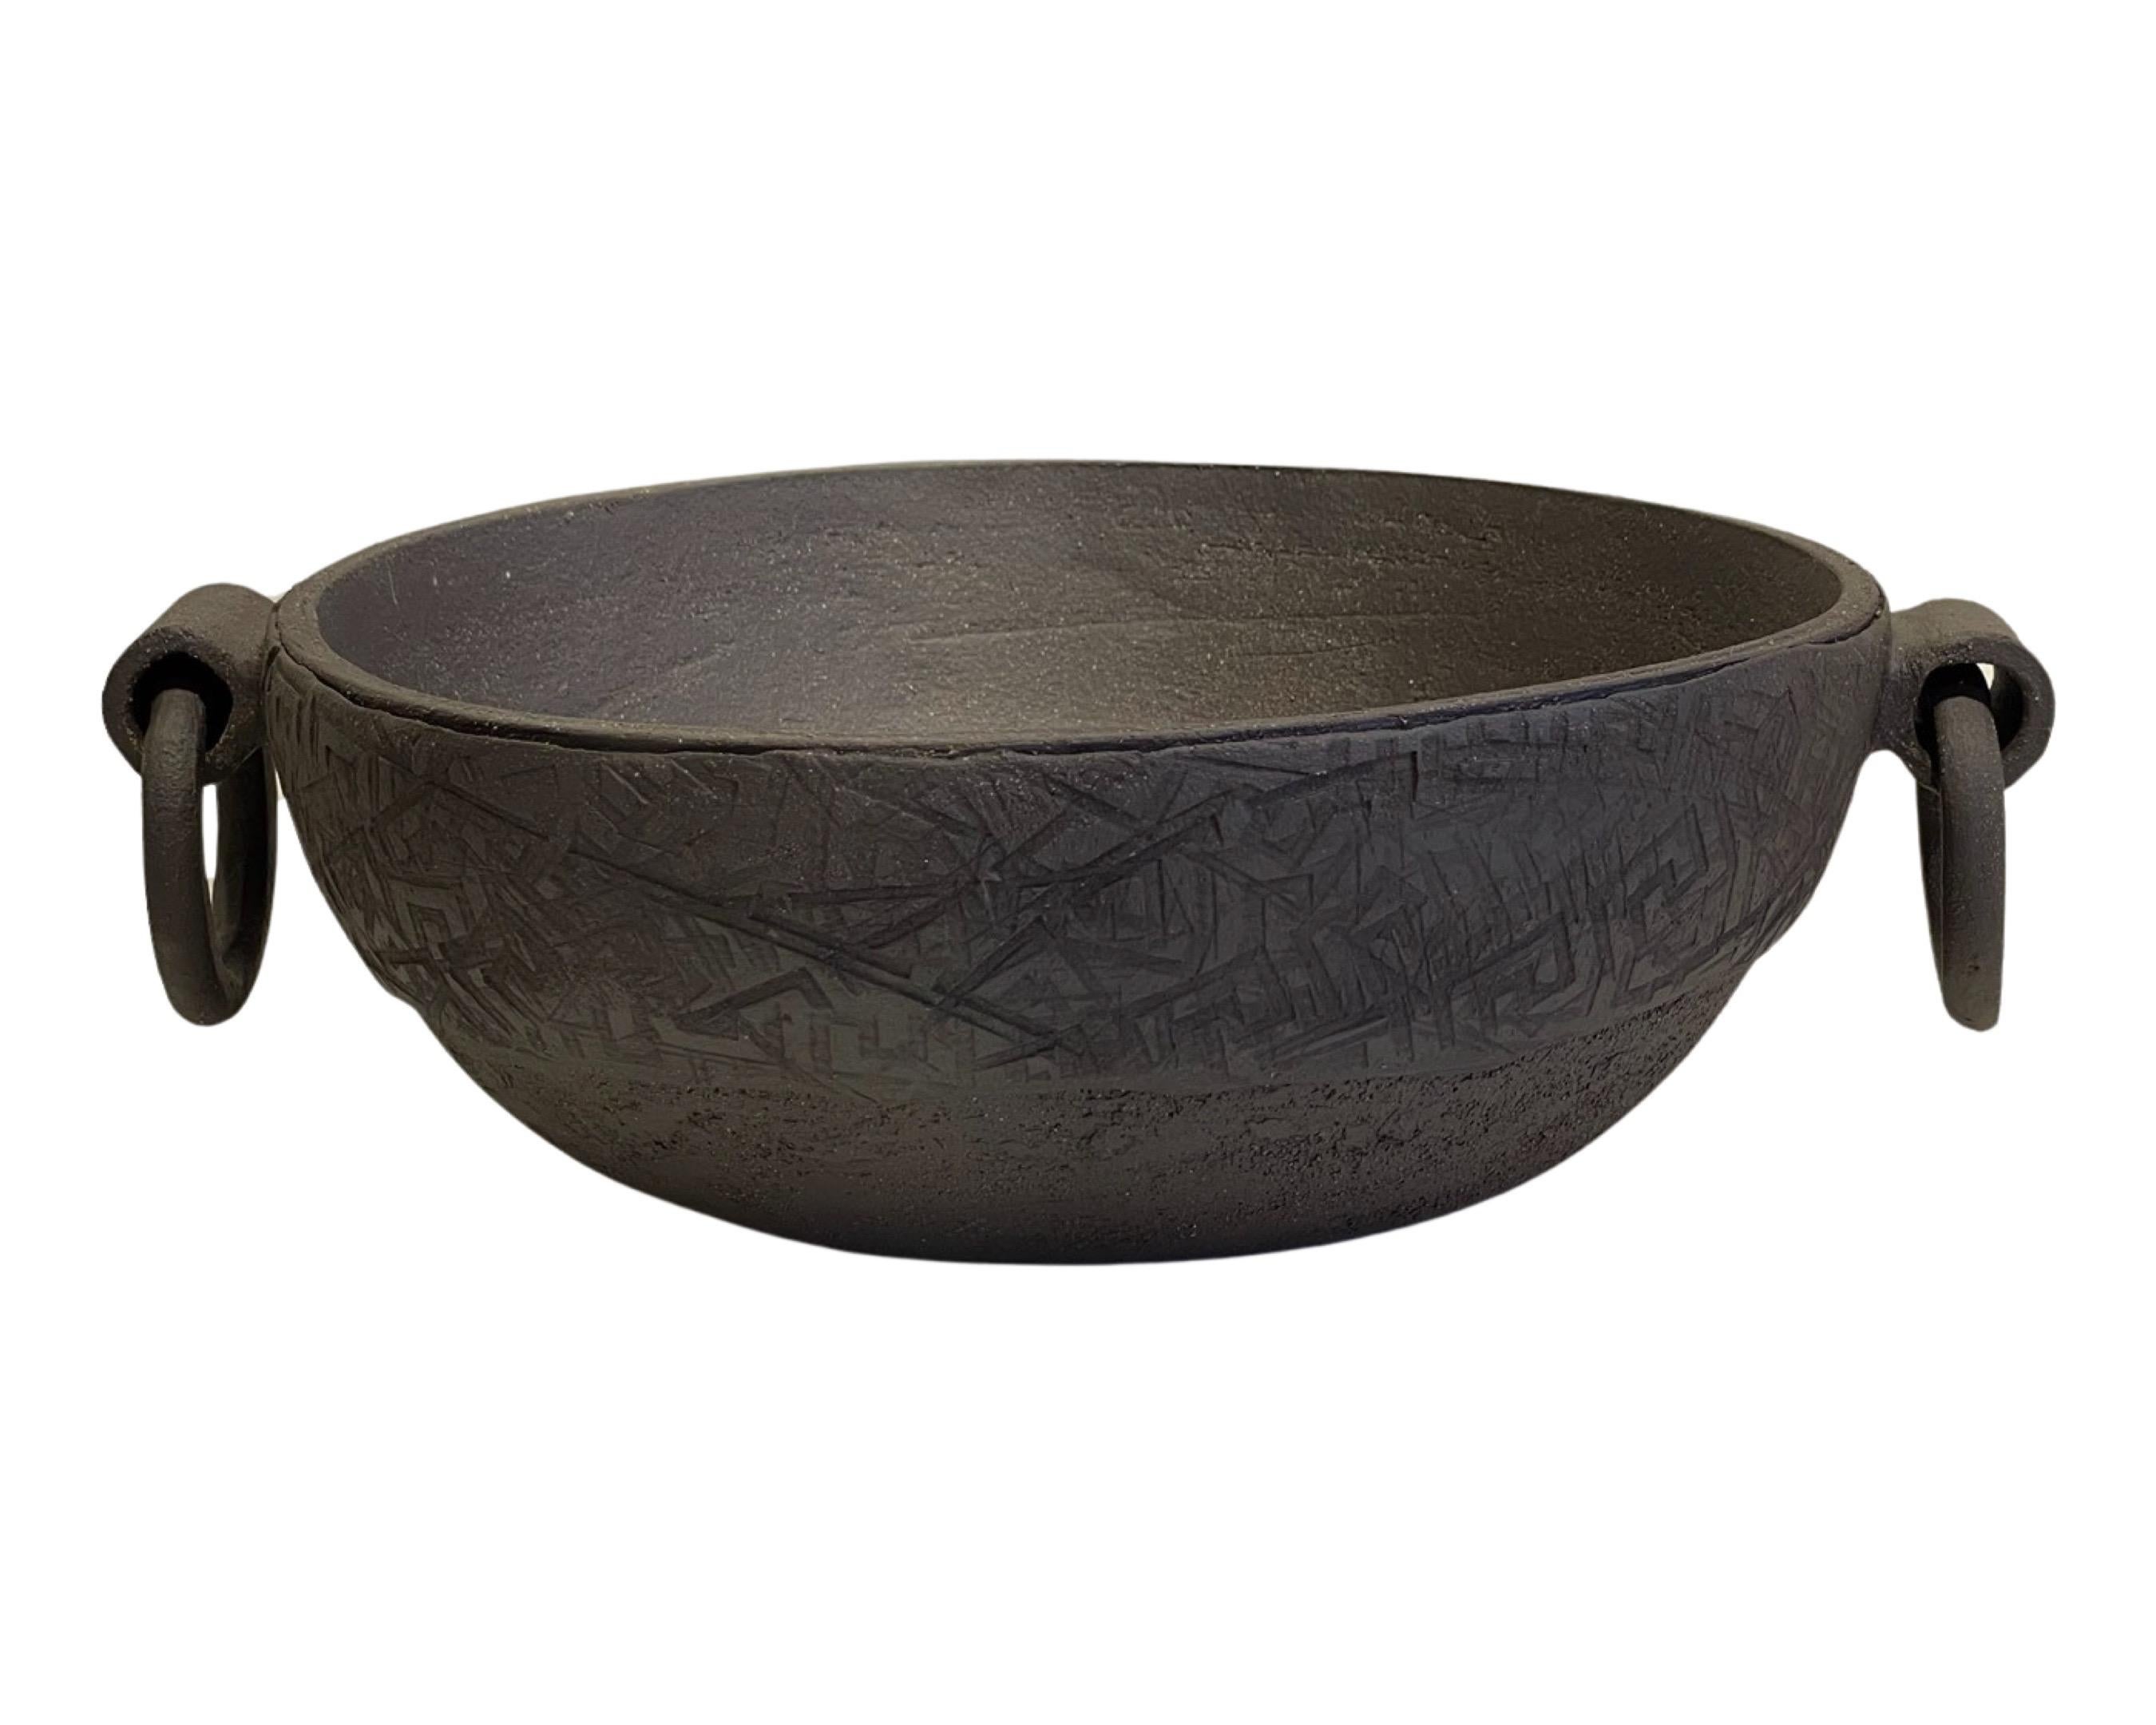 Organic Modern Artisanal Ceramic Centerpiece, Handcrafted Decorative Bowl, Dark Brown